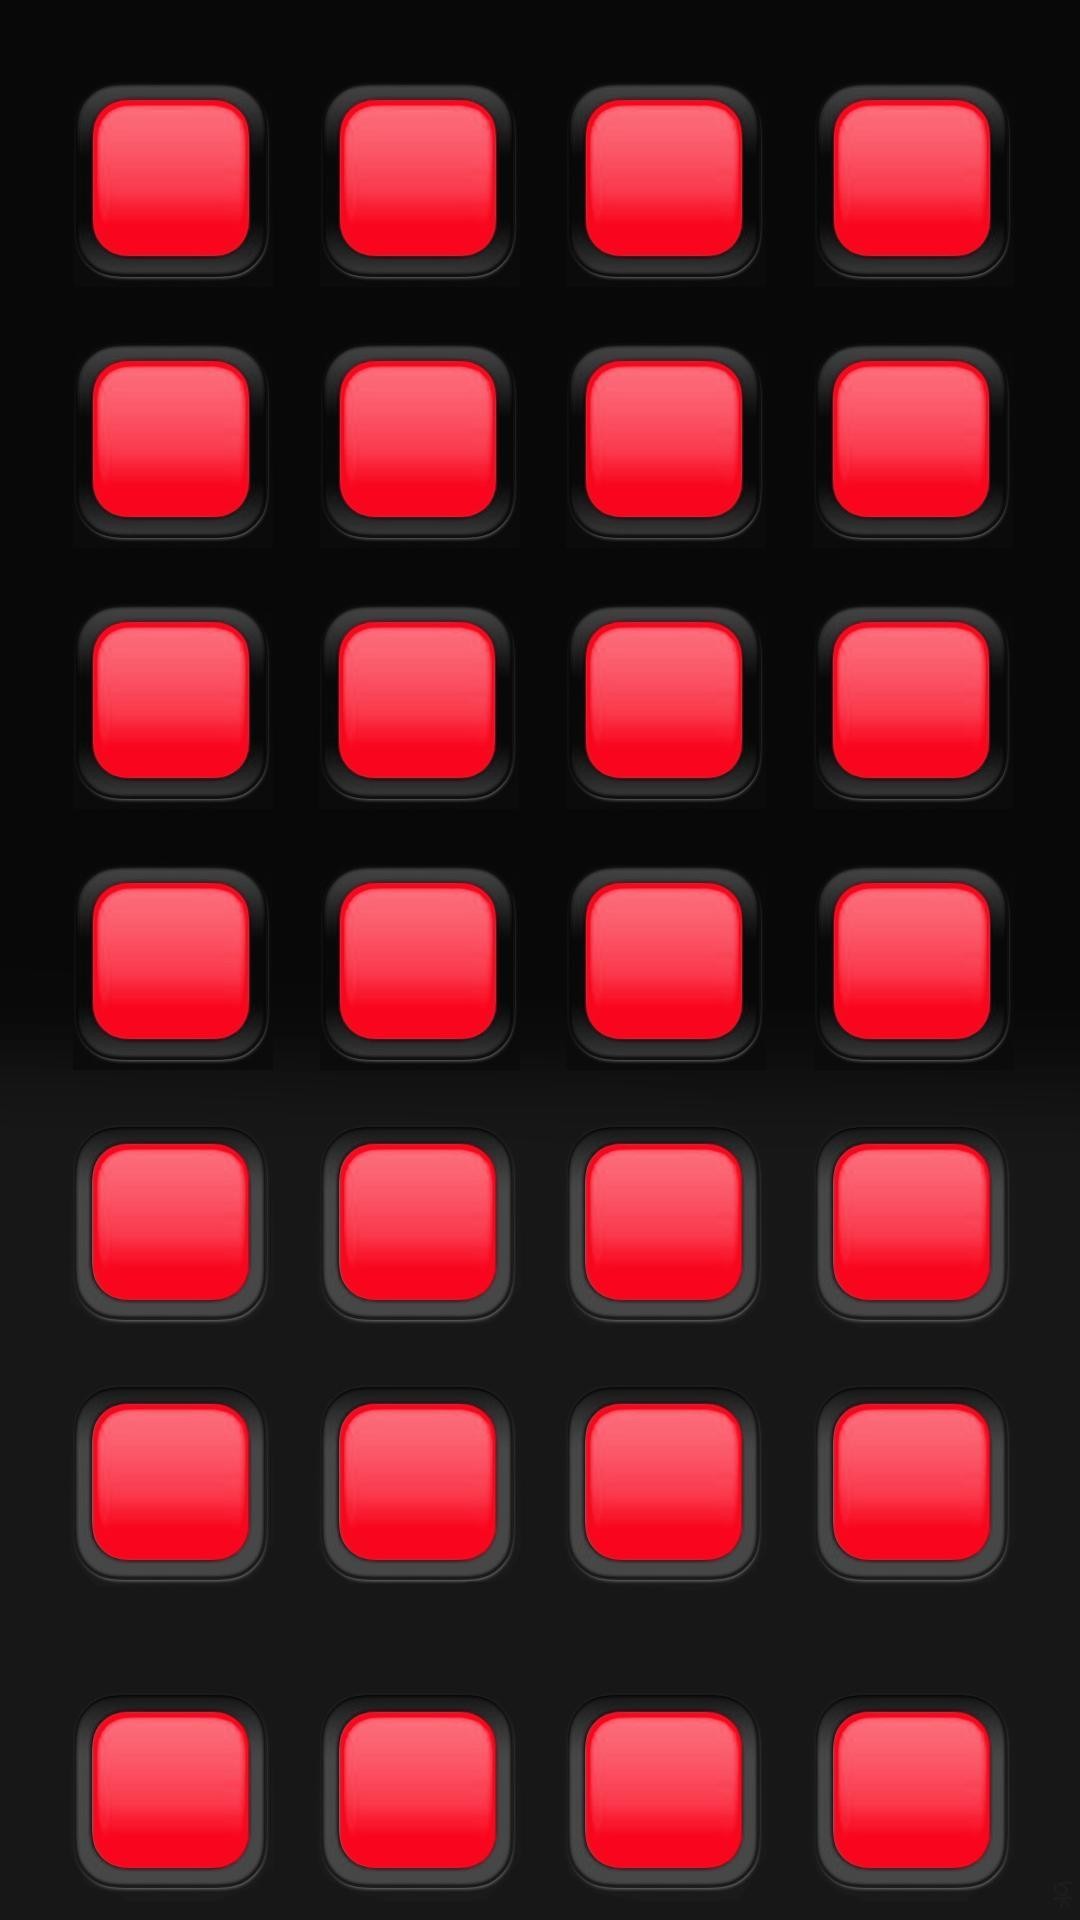 1080x1920 iPhone 7 Plus Wallpaper Homescreens plus black red squares